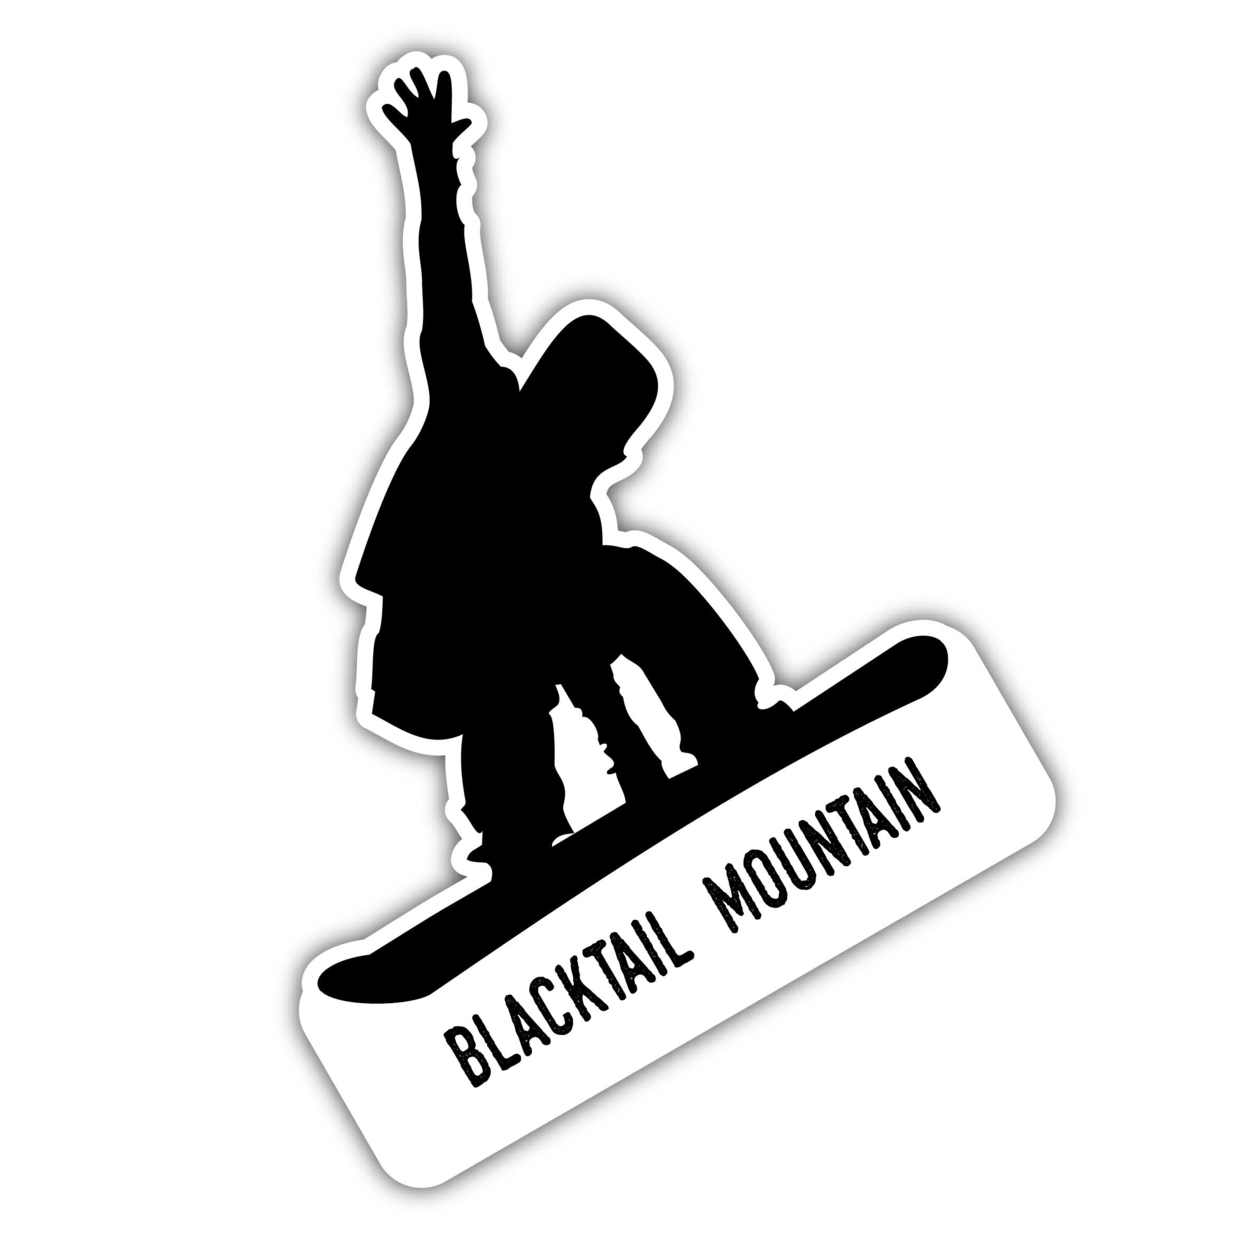 Blacktail Mountain Montana Ski Adventures Souvenir 4 Inch Vinyl Decal Sticker Mountain Design